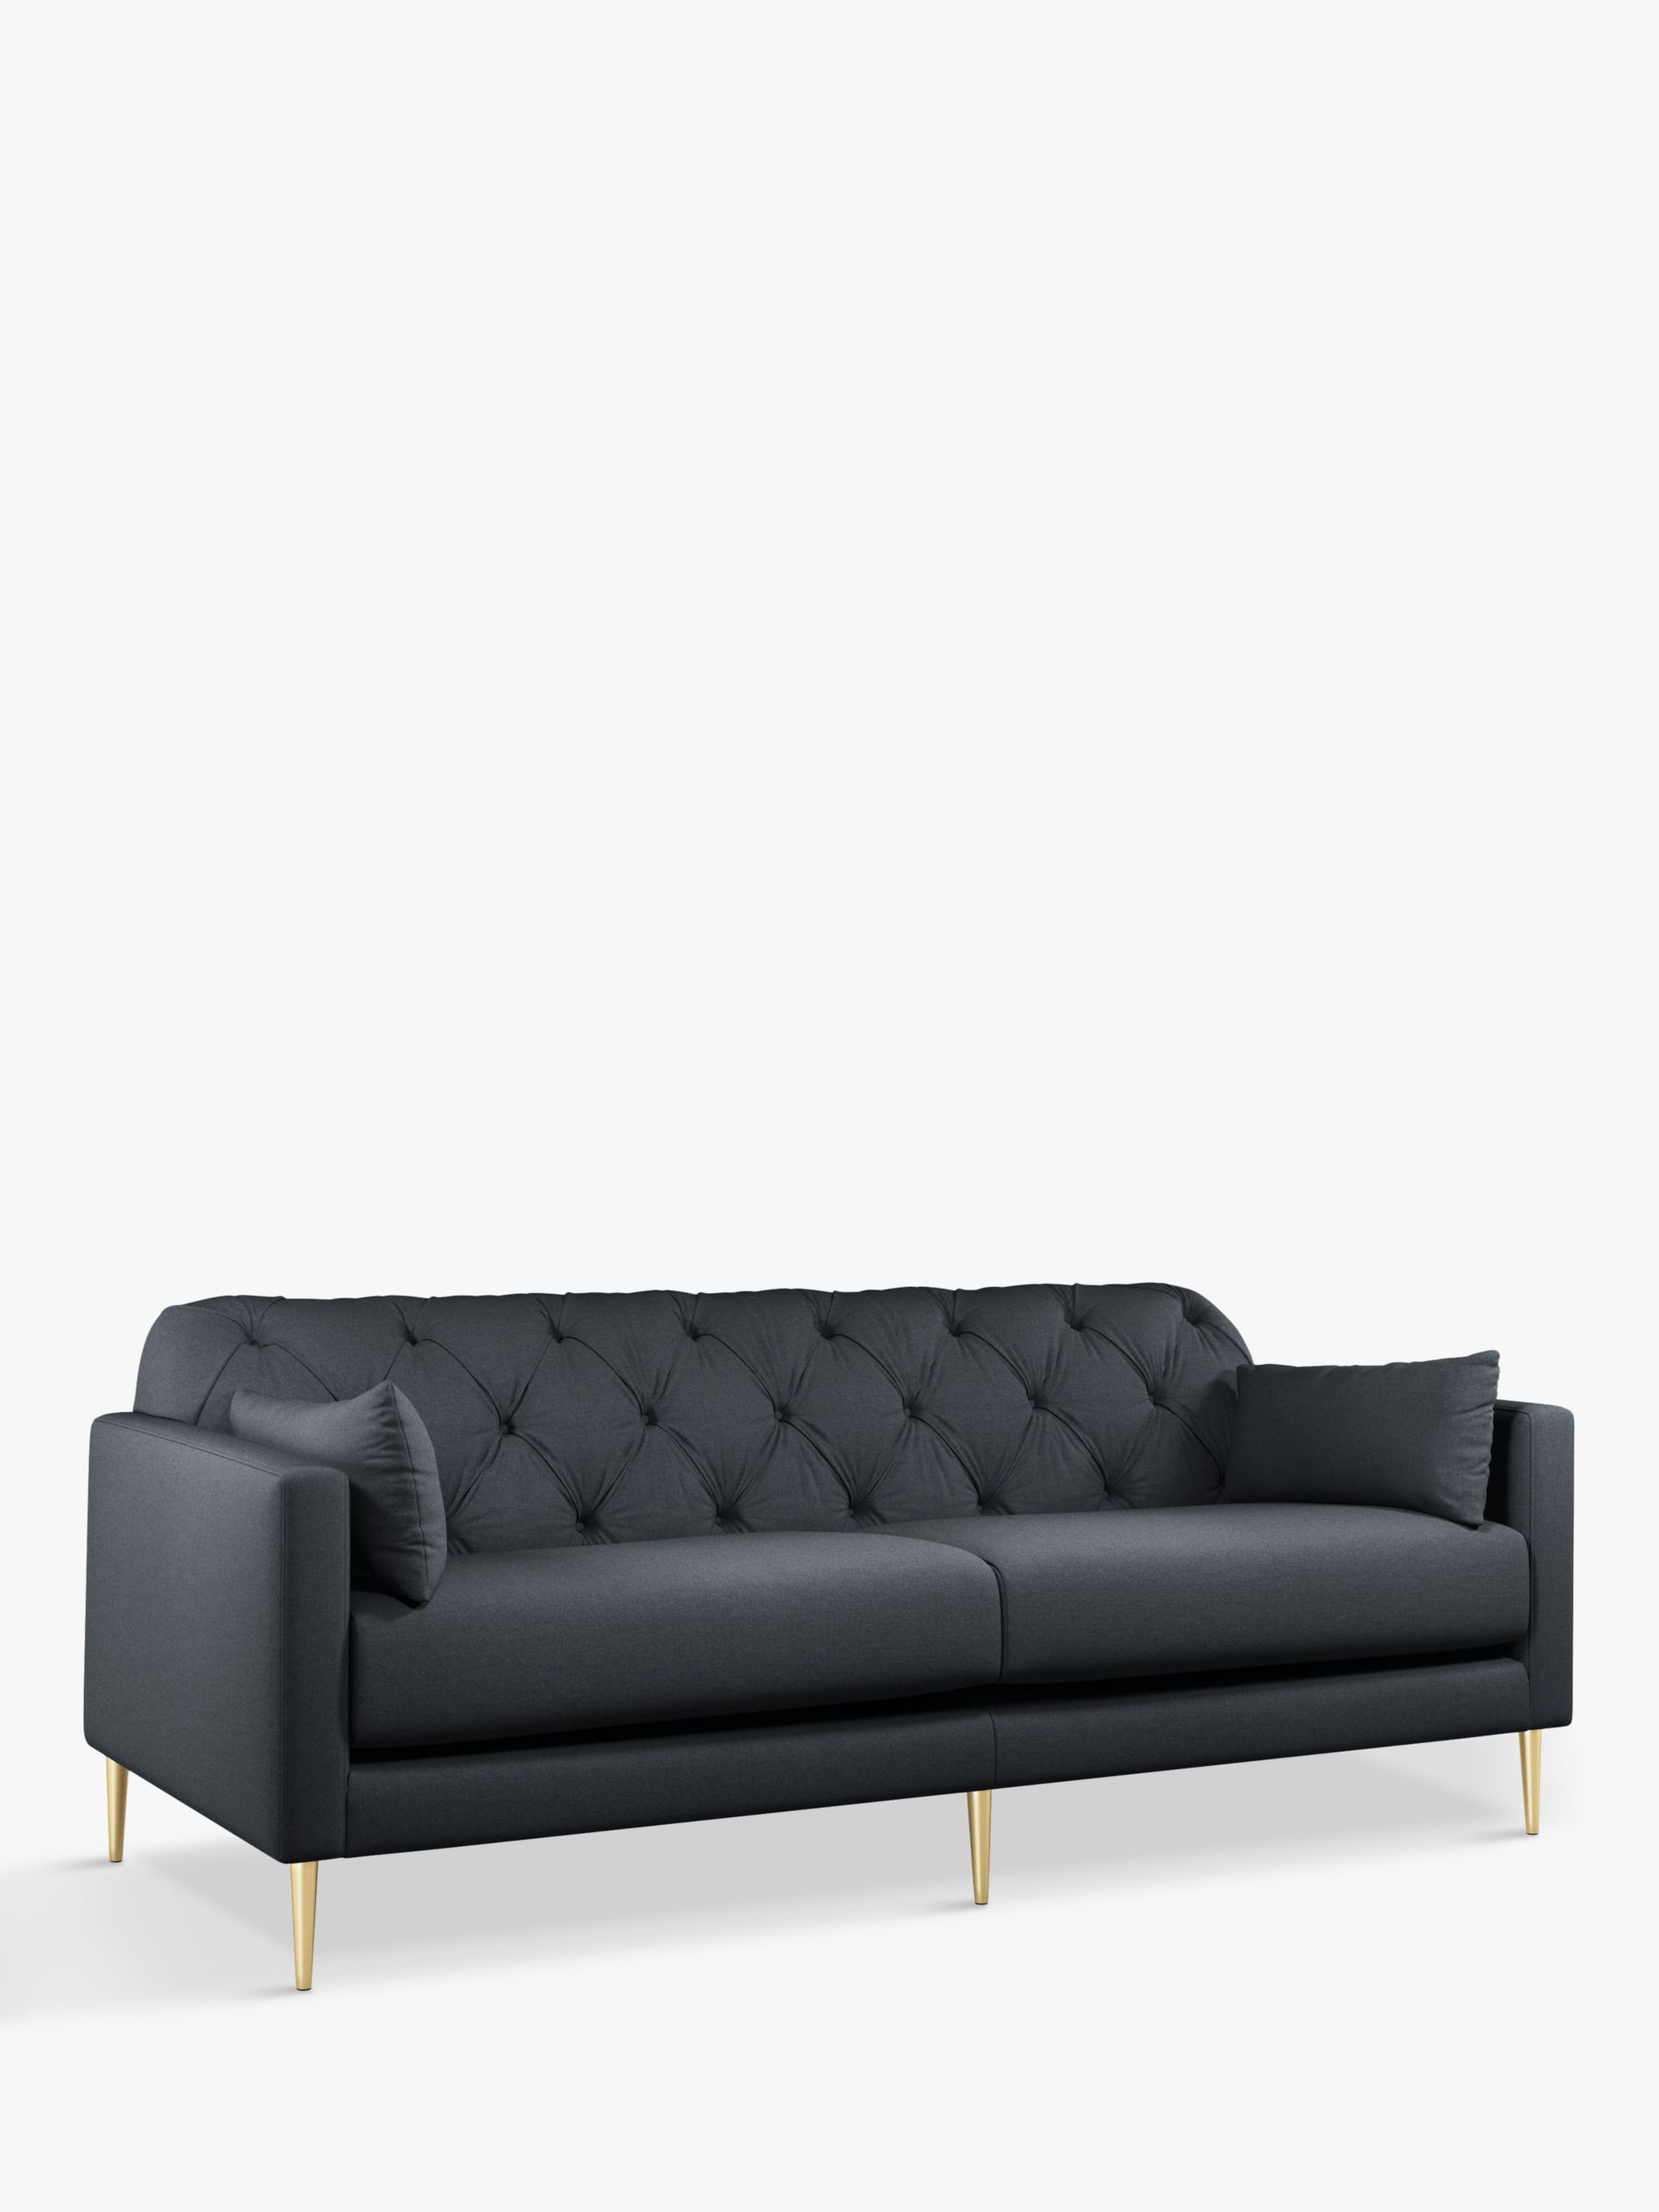 Mendel Range, Swoon Mendel Large 3 Seater Sofa, Gold Leg, Charcoal Cotton